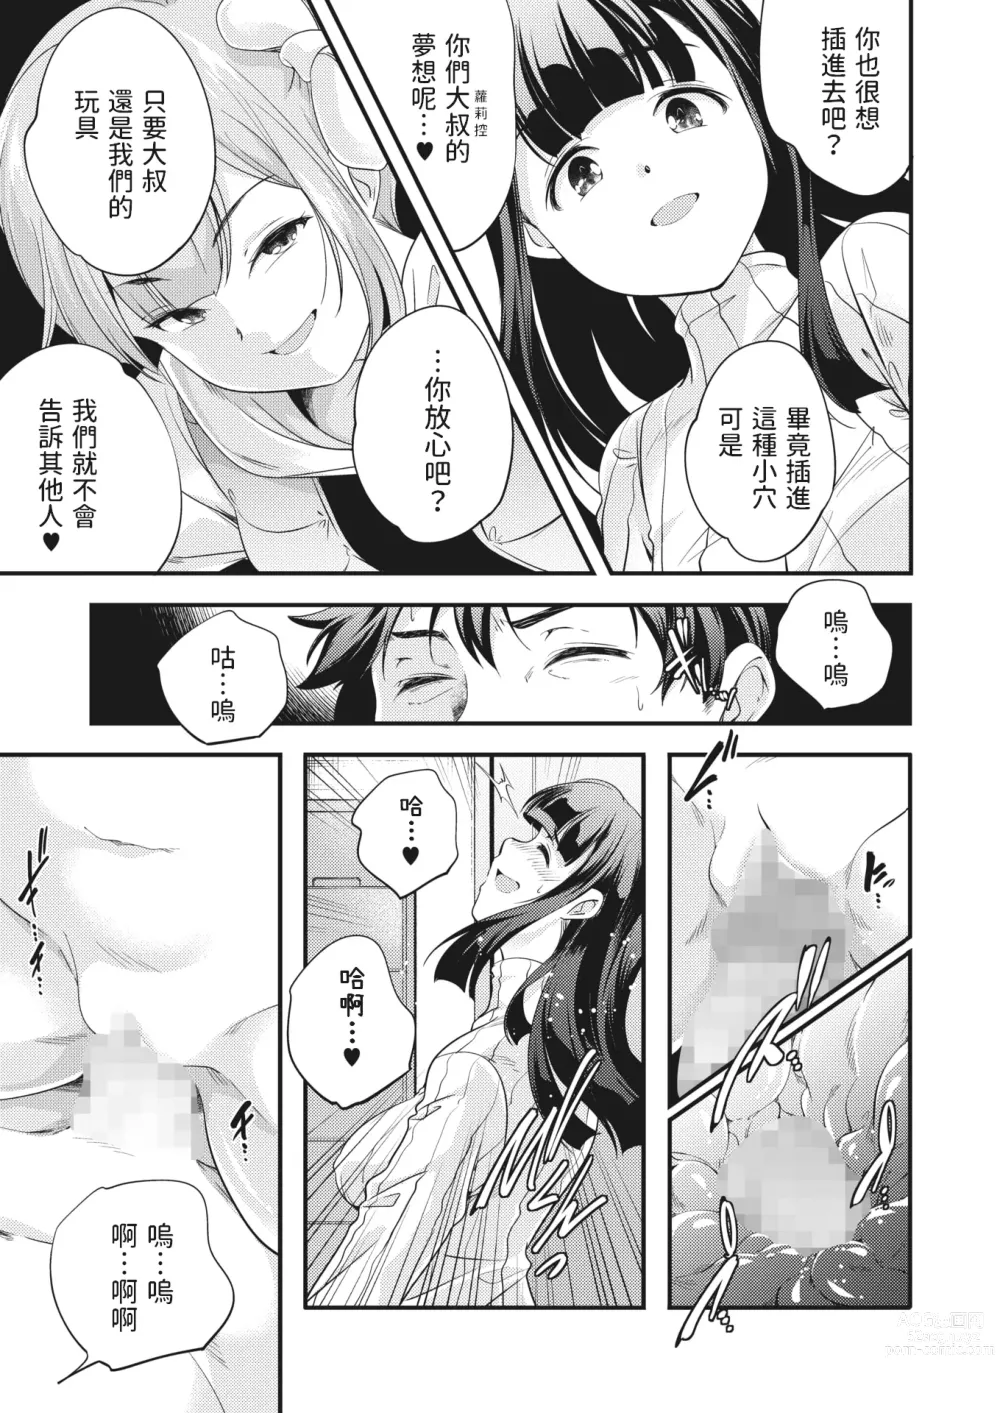 Page 9 of manga Ariadone